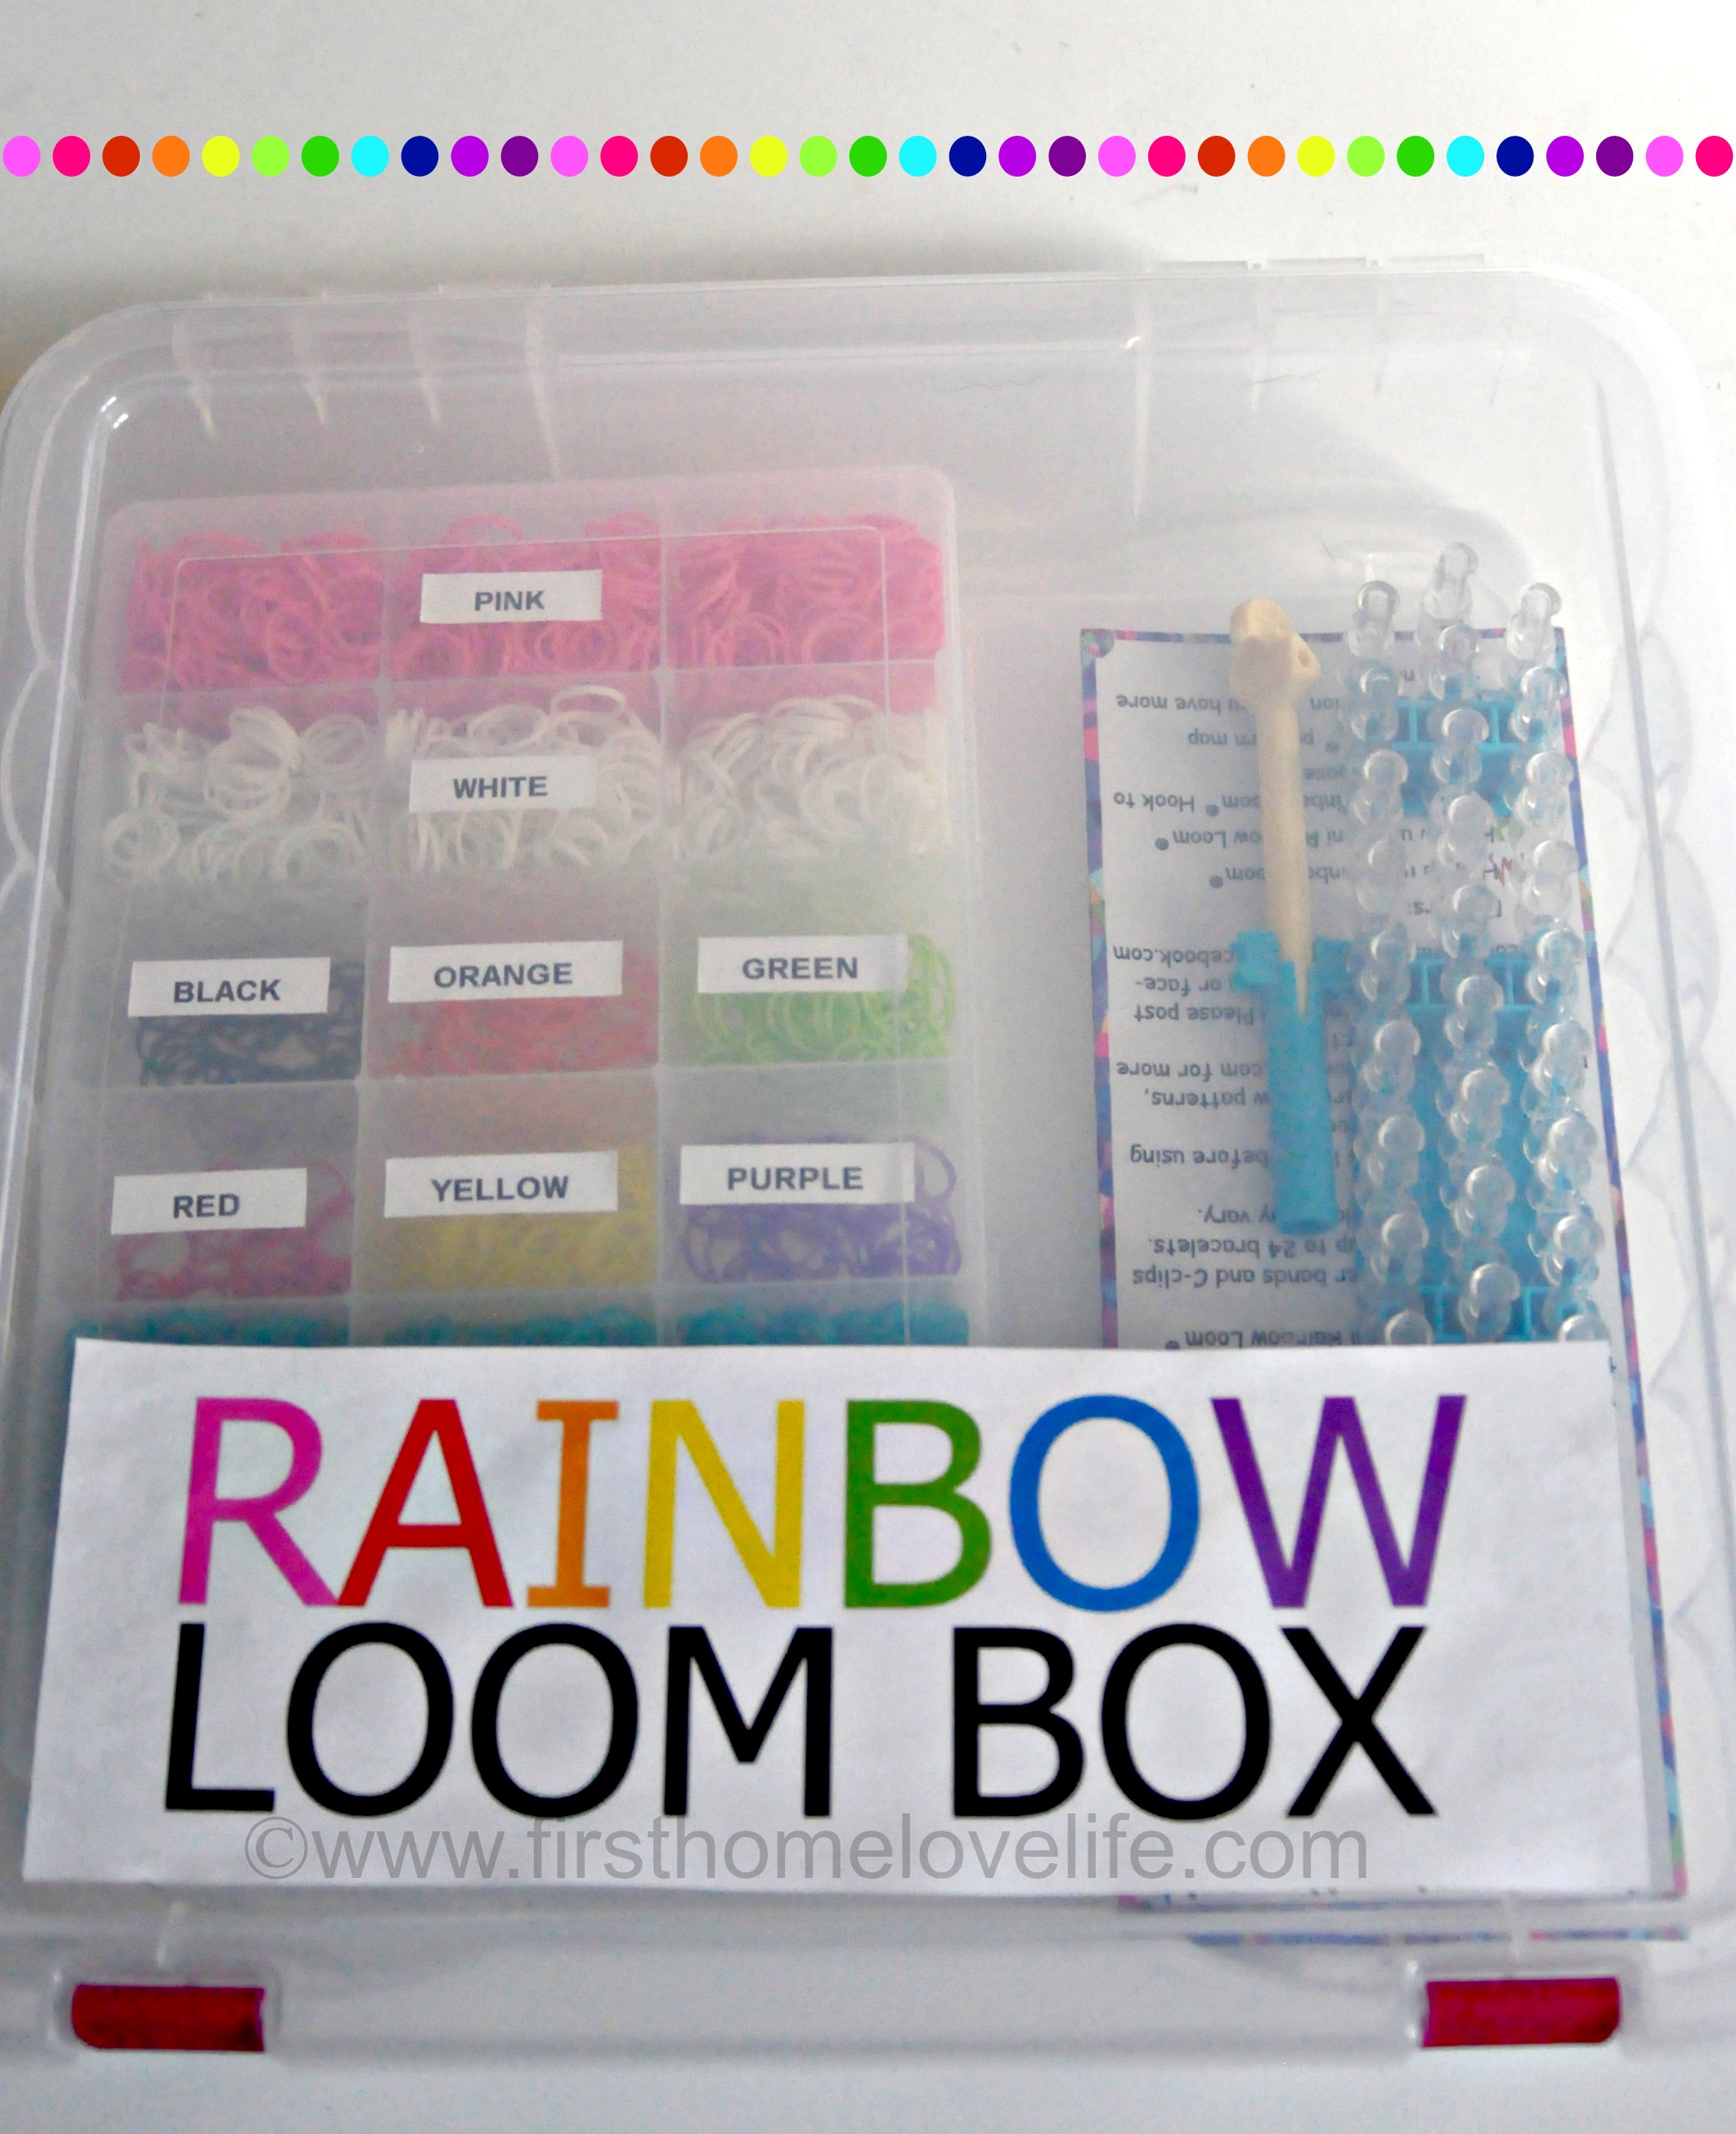 Rainbow Loom Band Craft Storage Box, Large Craft Storage Box